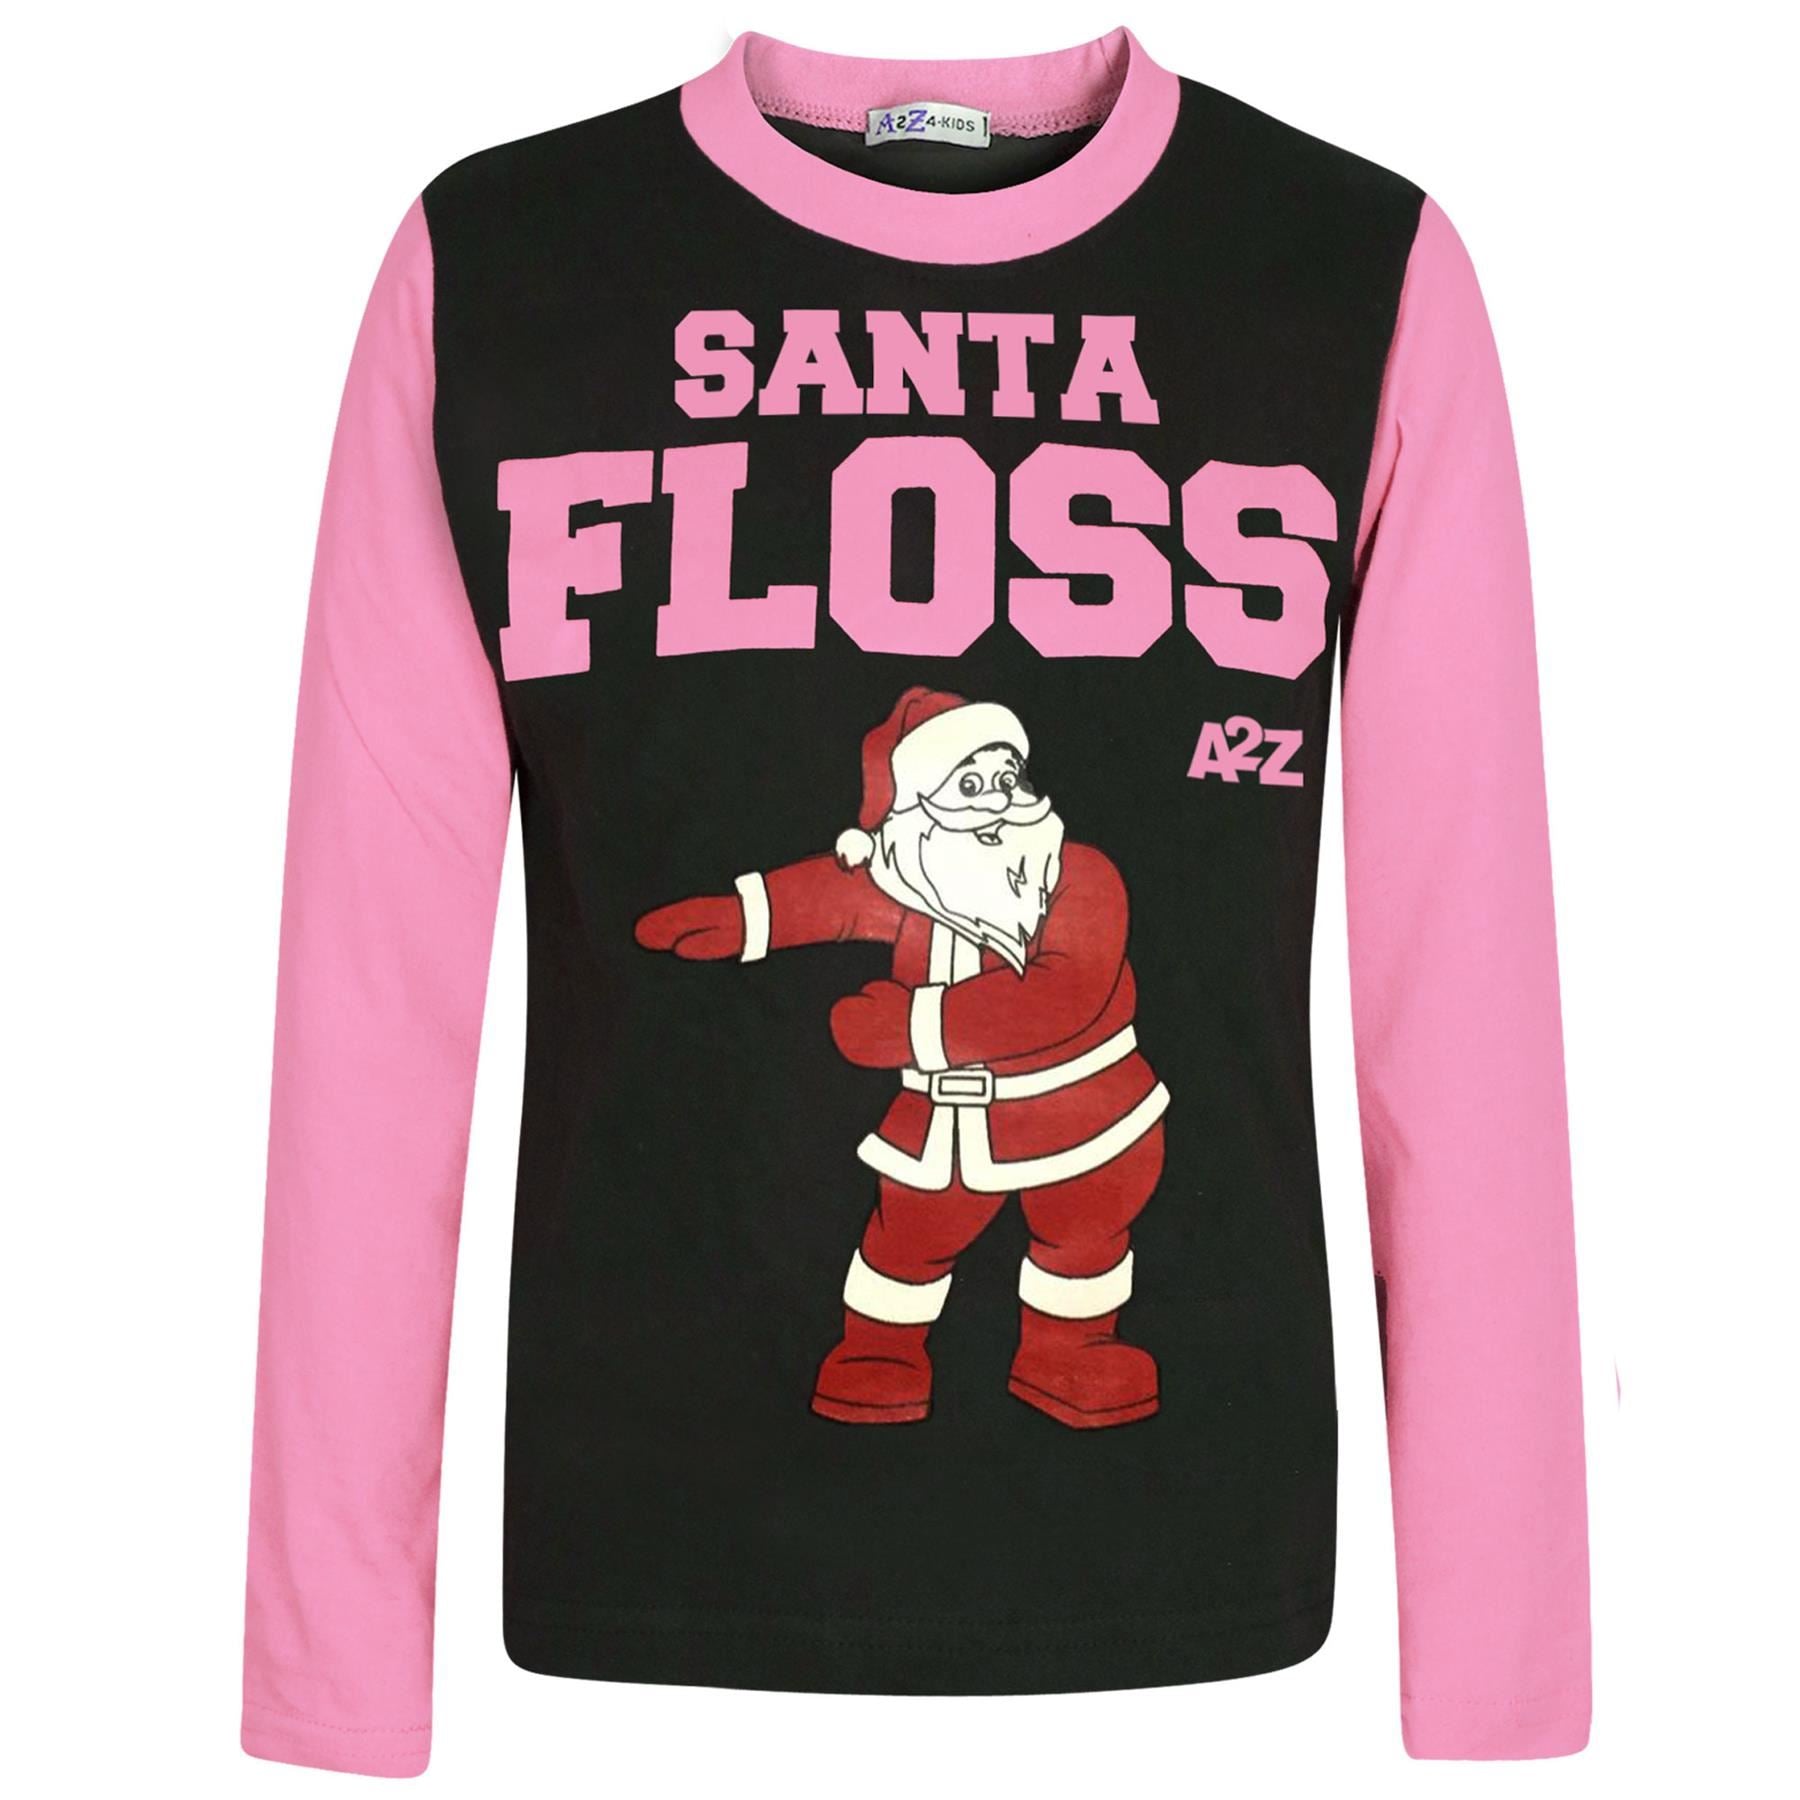 Kids Unisex Santa Floss A2Z Christmas Pyjamas Outfits Set